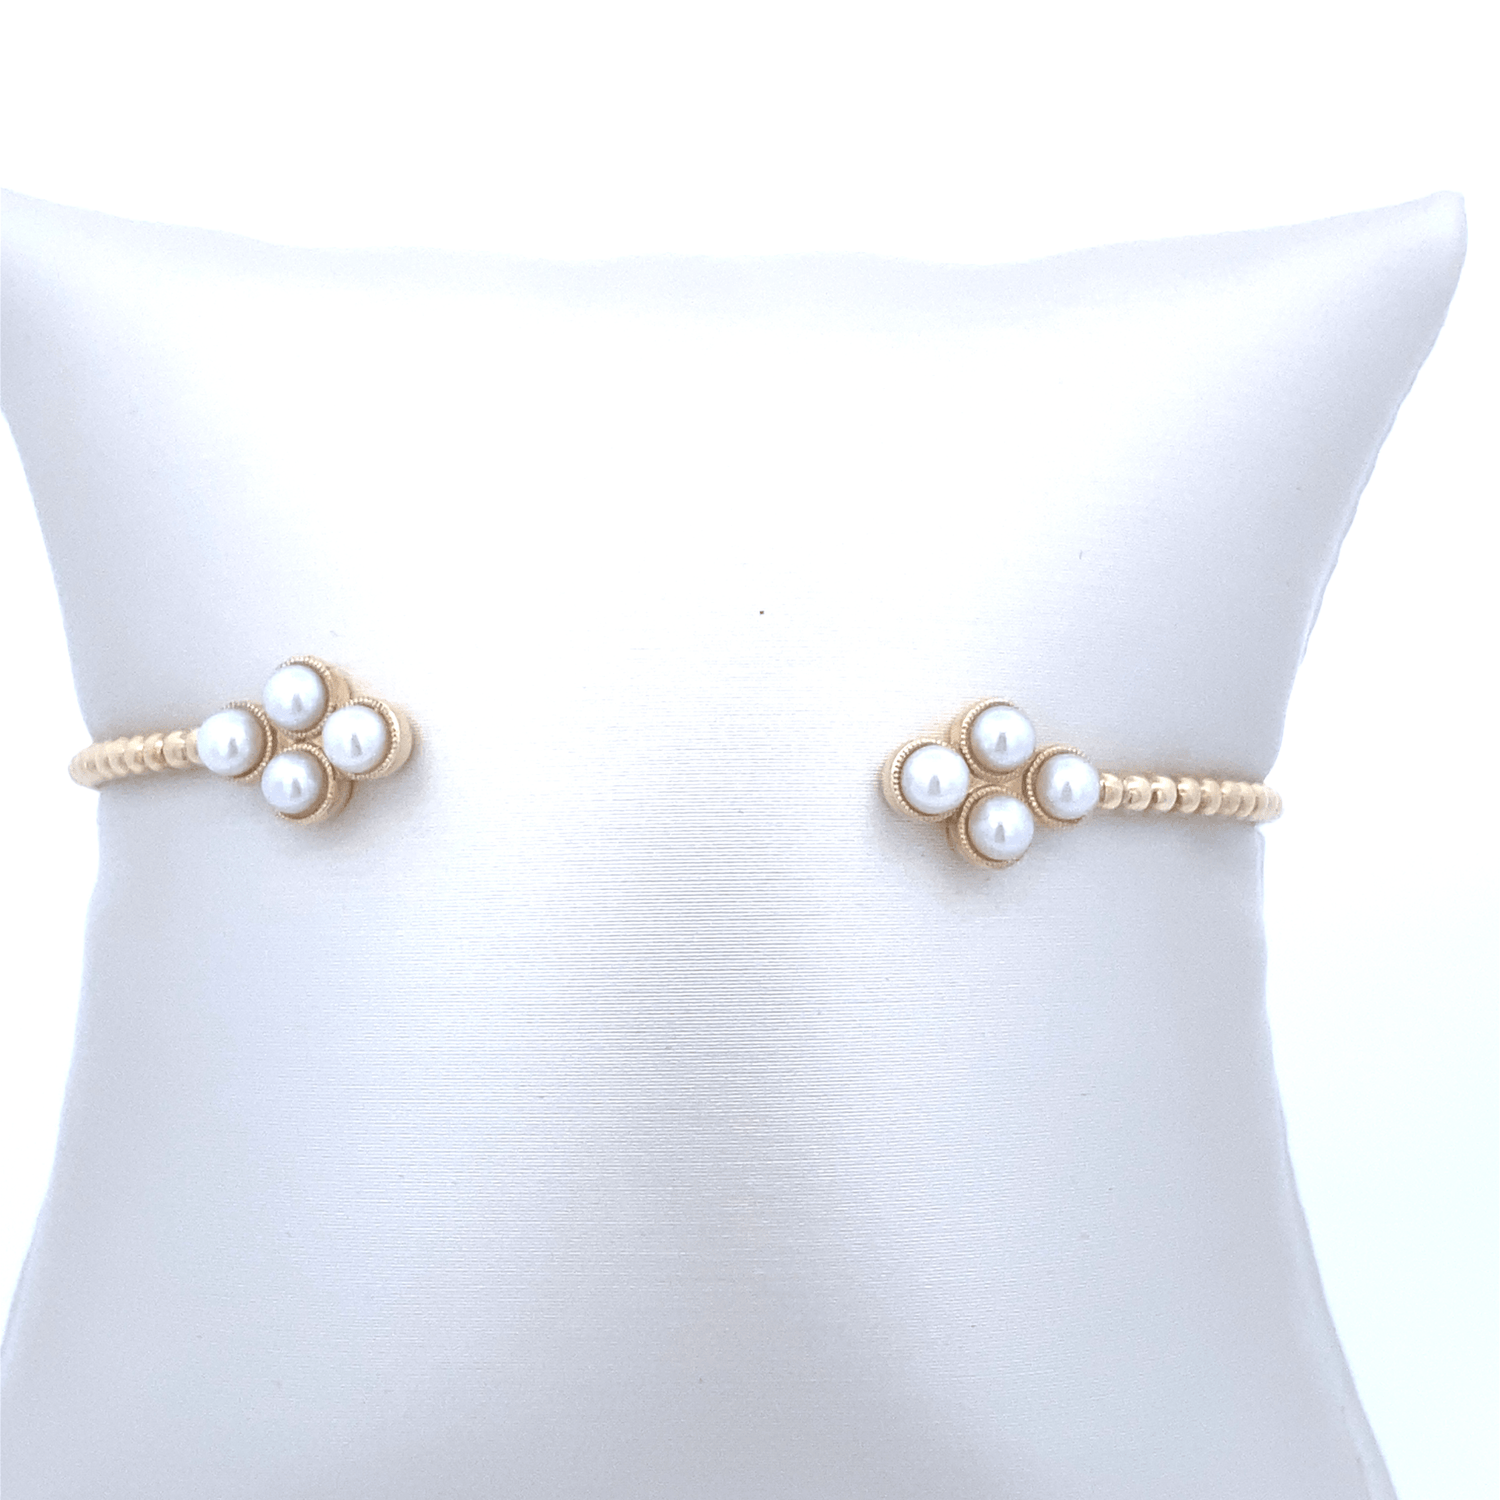 Bracelet- 14K Yellow Gold Cultured Pearl Beaded Open Flex Cuff - Gaines Jewelers